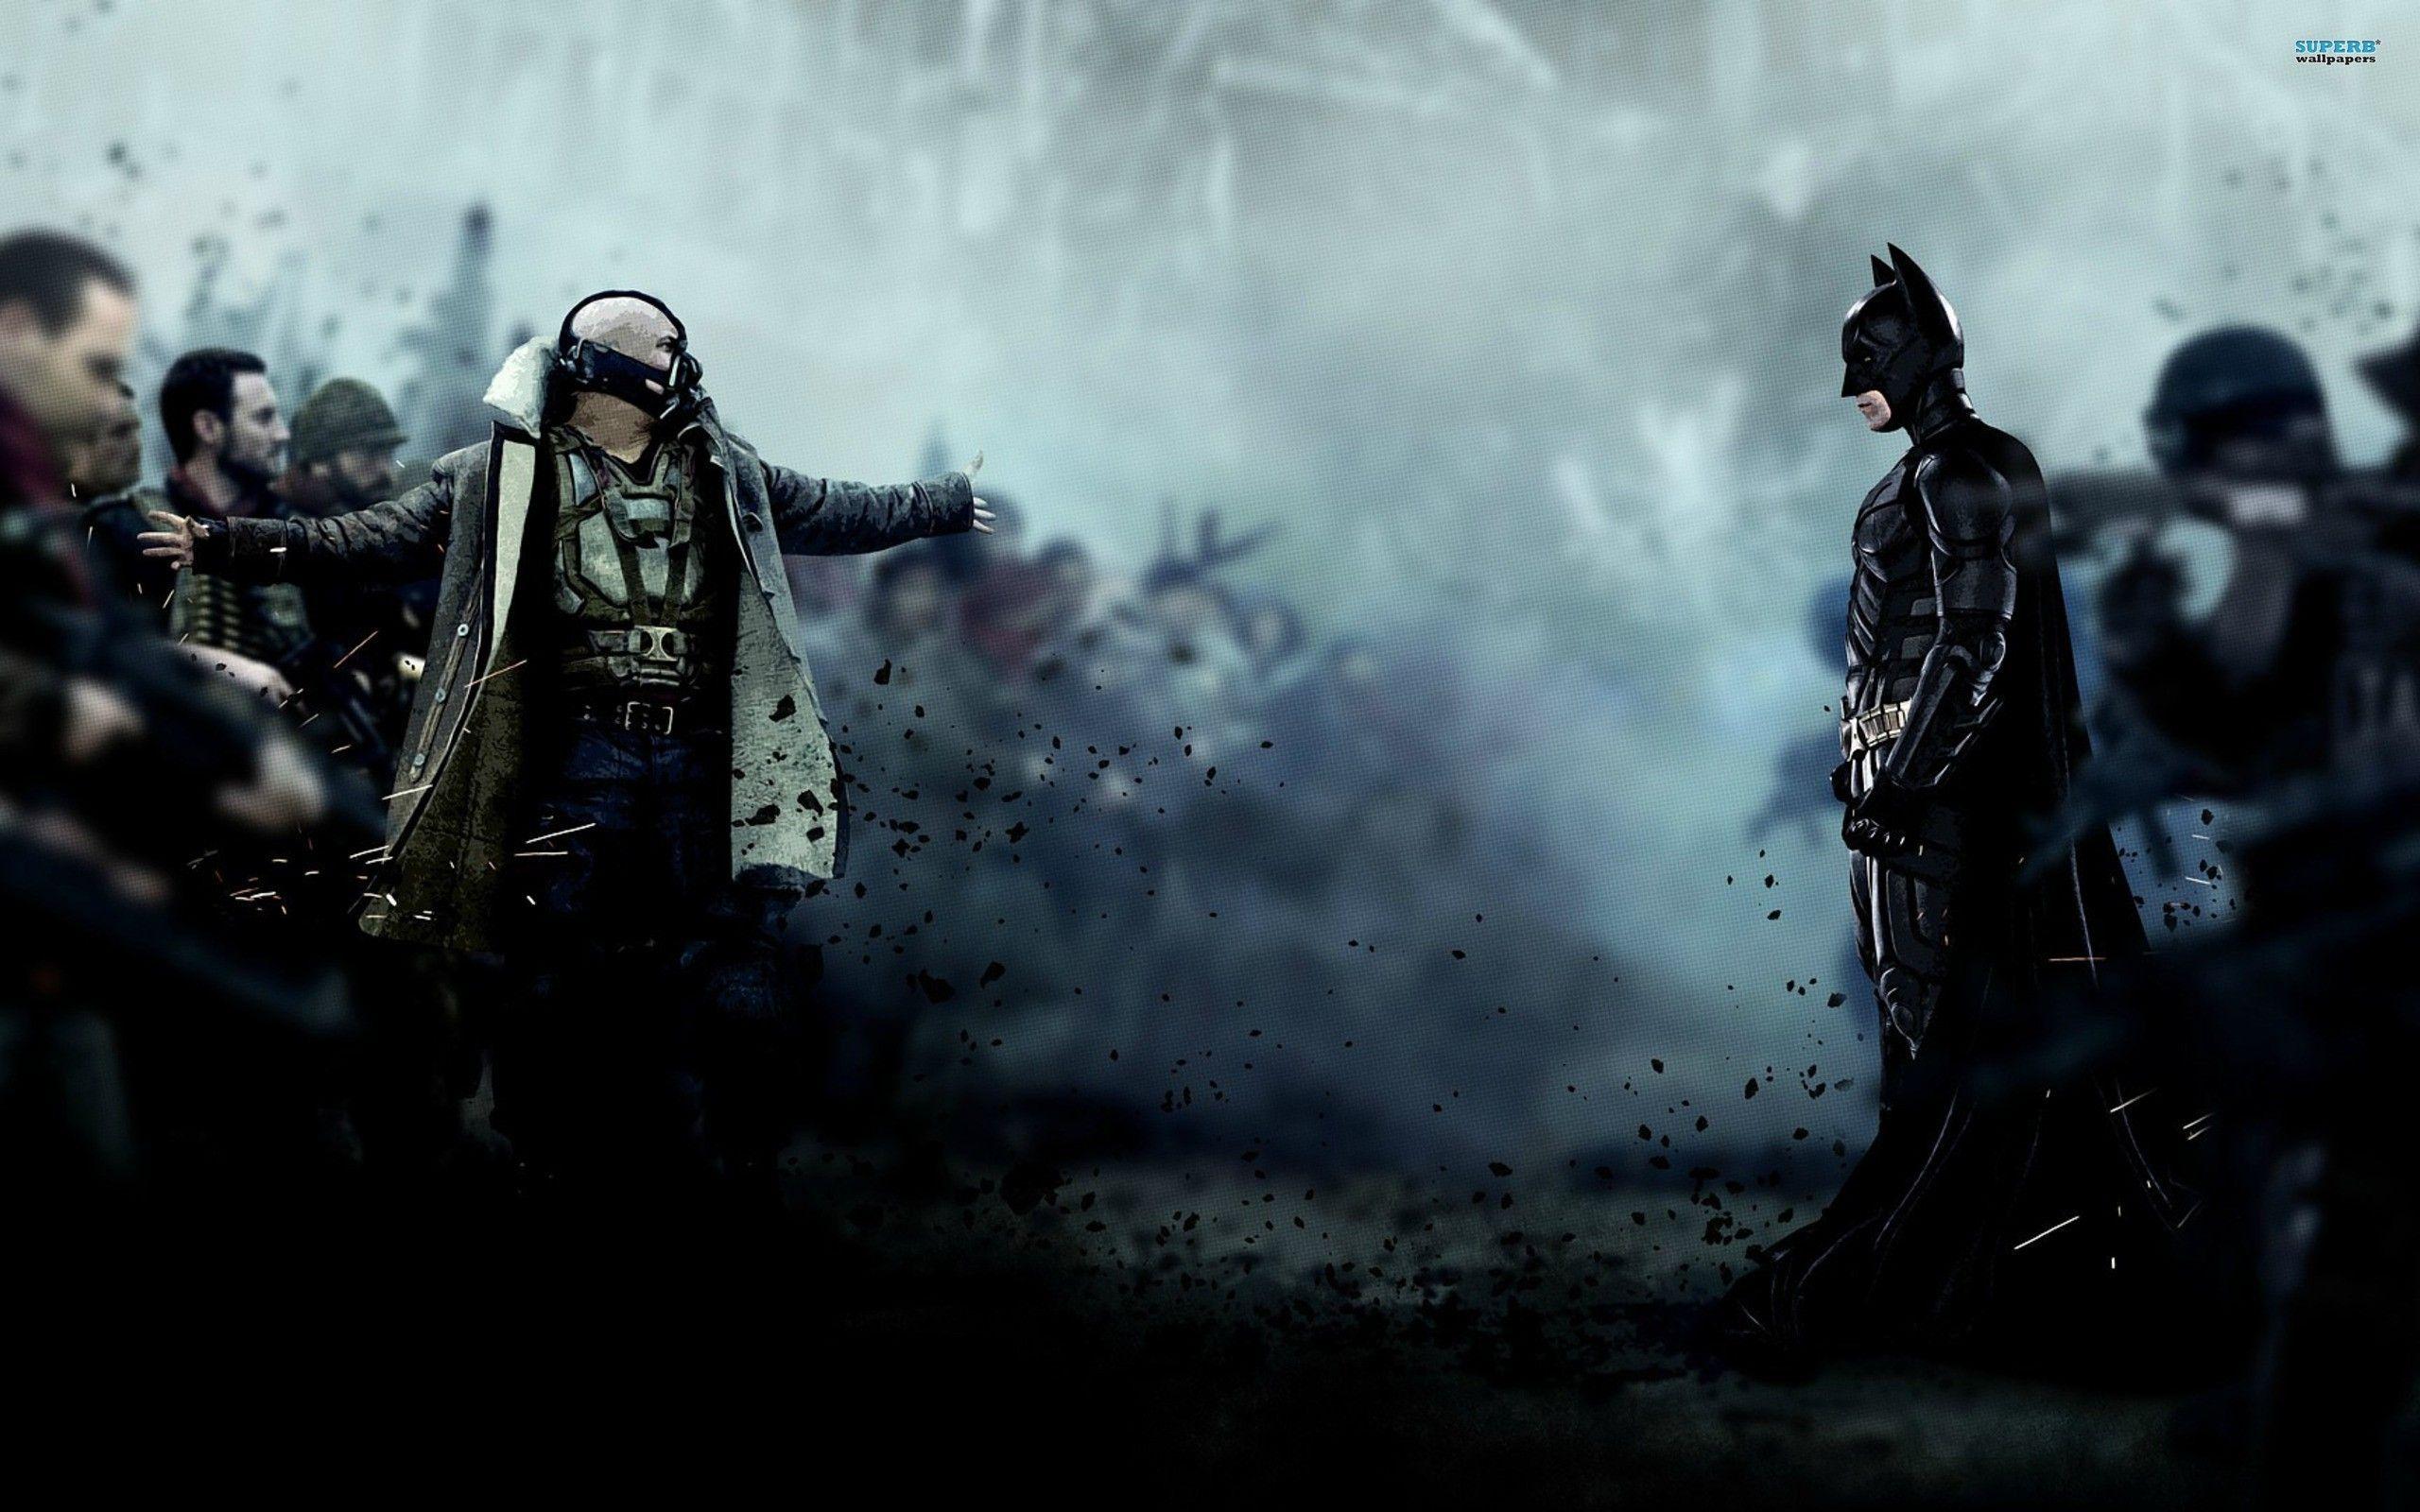 Wallpaper batman dark bane knight rises images for desktop section  фильмы  download